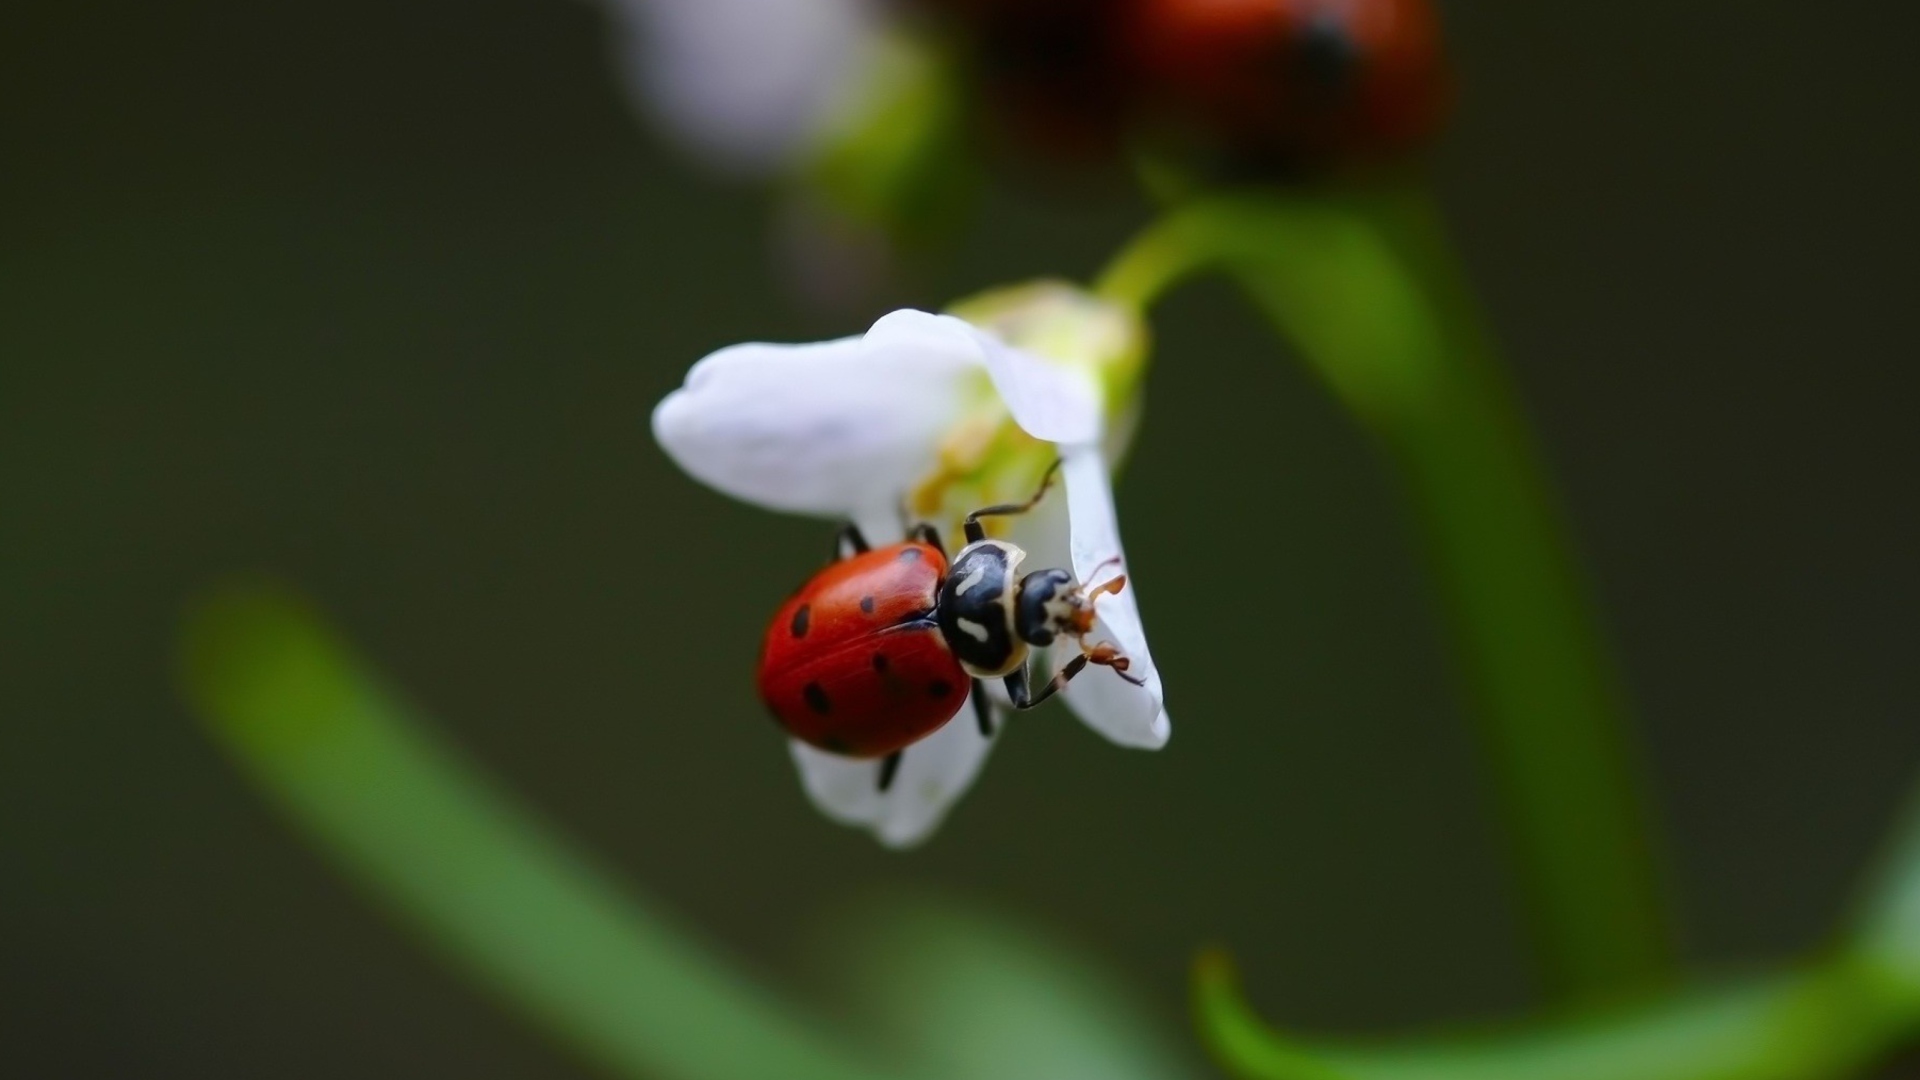 Обои Ladybug On Snowdrop 1920x1080